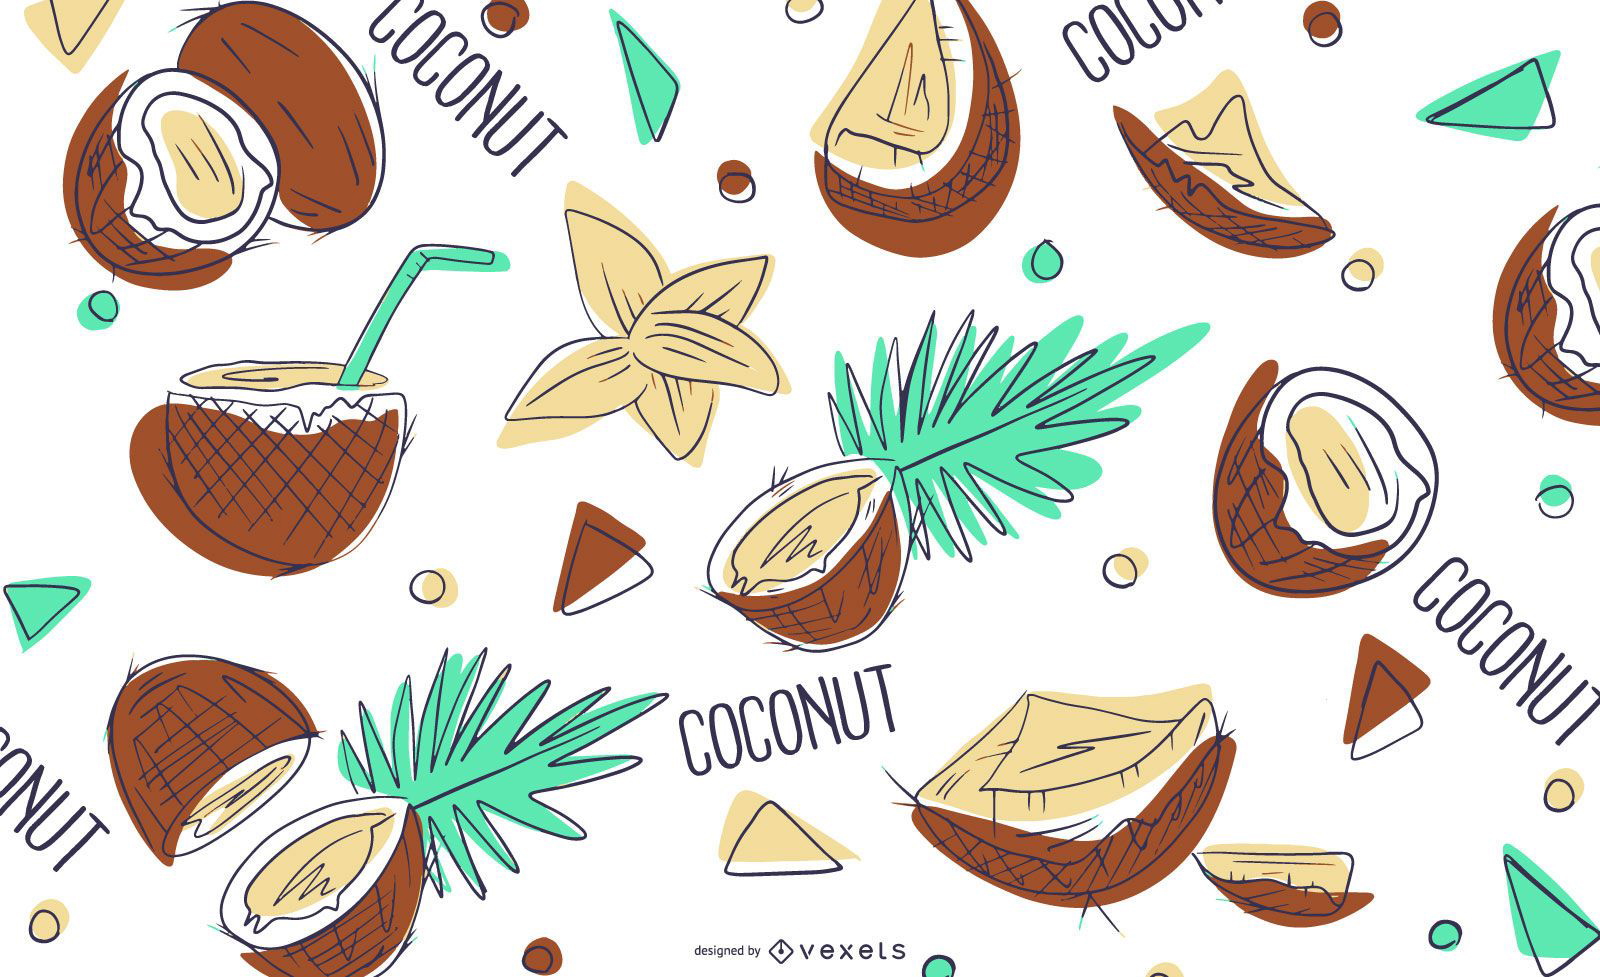 Coconut pattern design